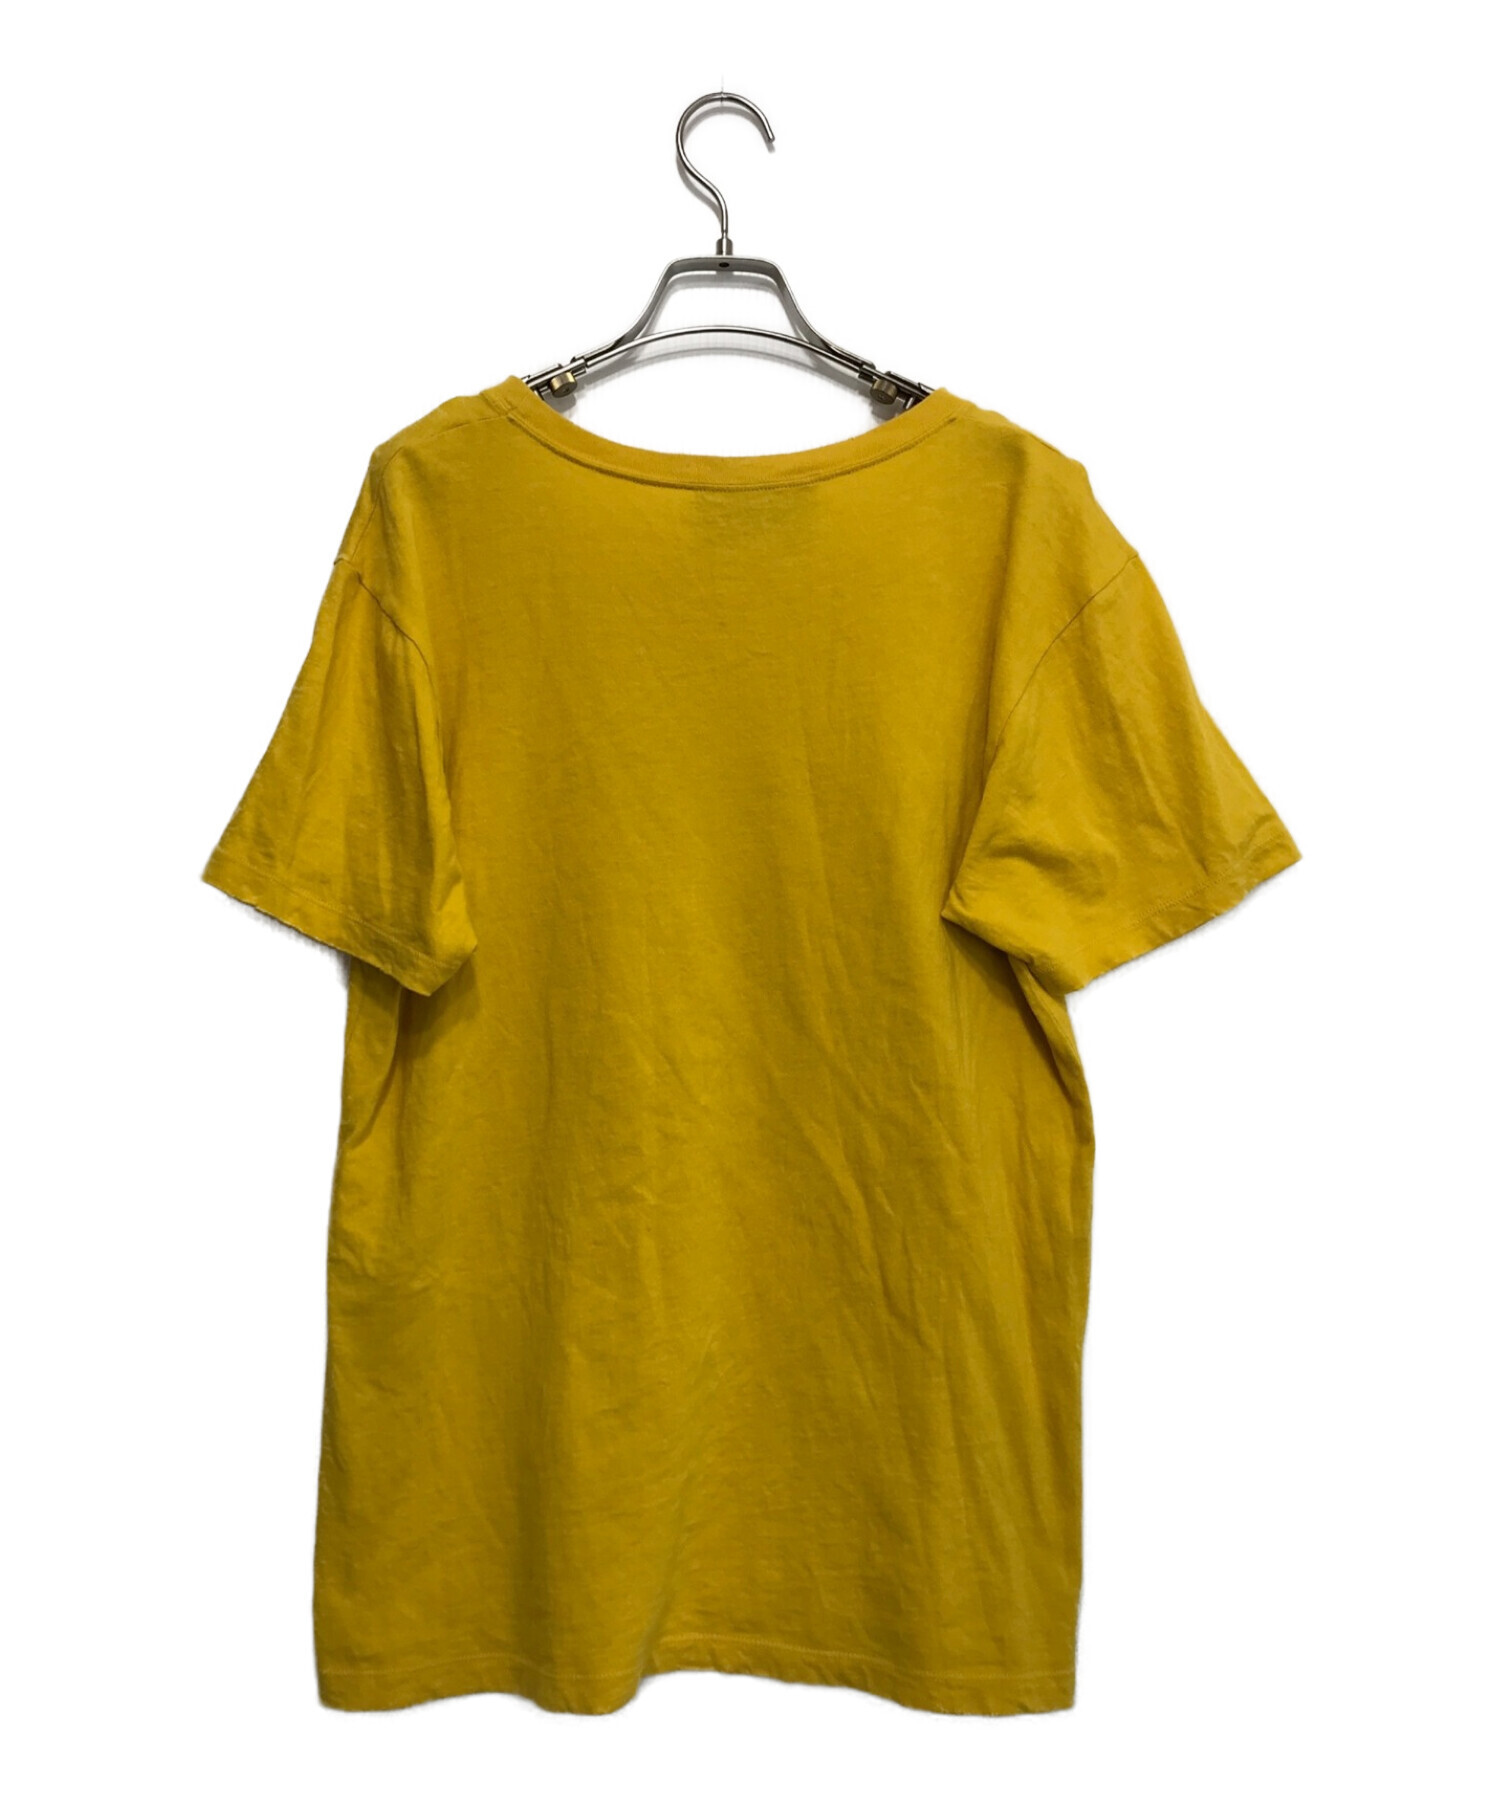 GUCCI (グッチ) ココキャピタン ヴィンテージロゴ半袖Tシャツ イエロー サイズ:S